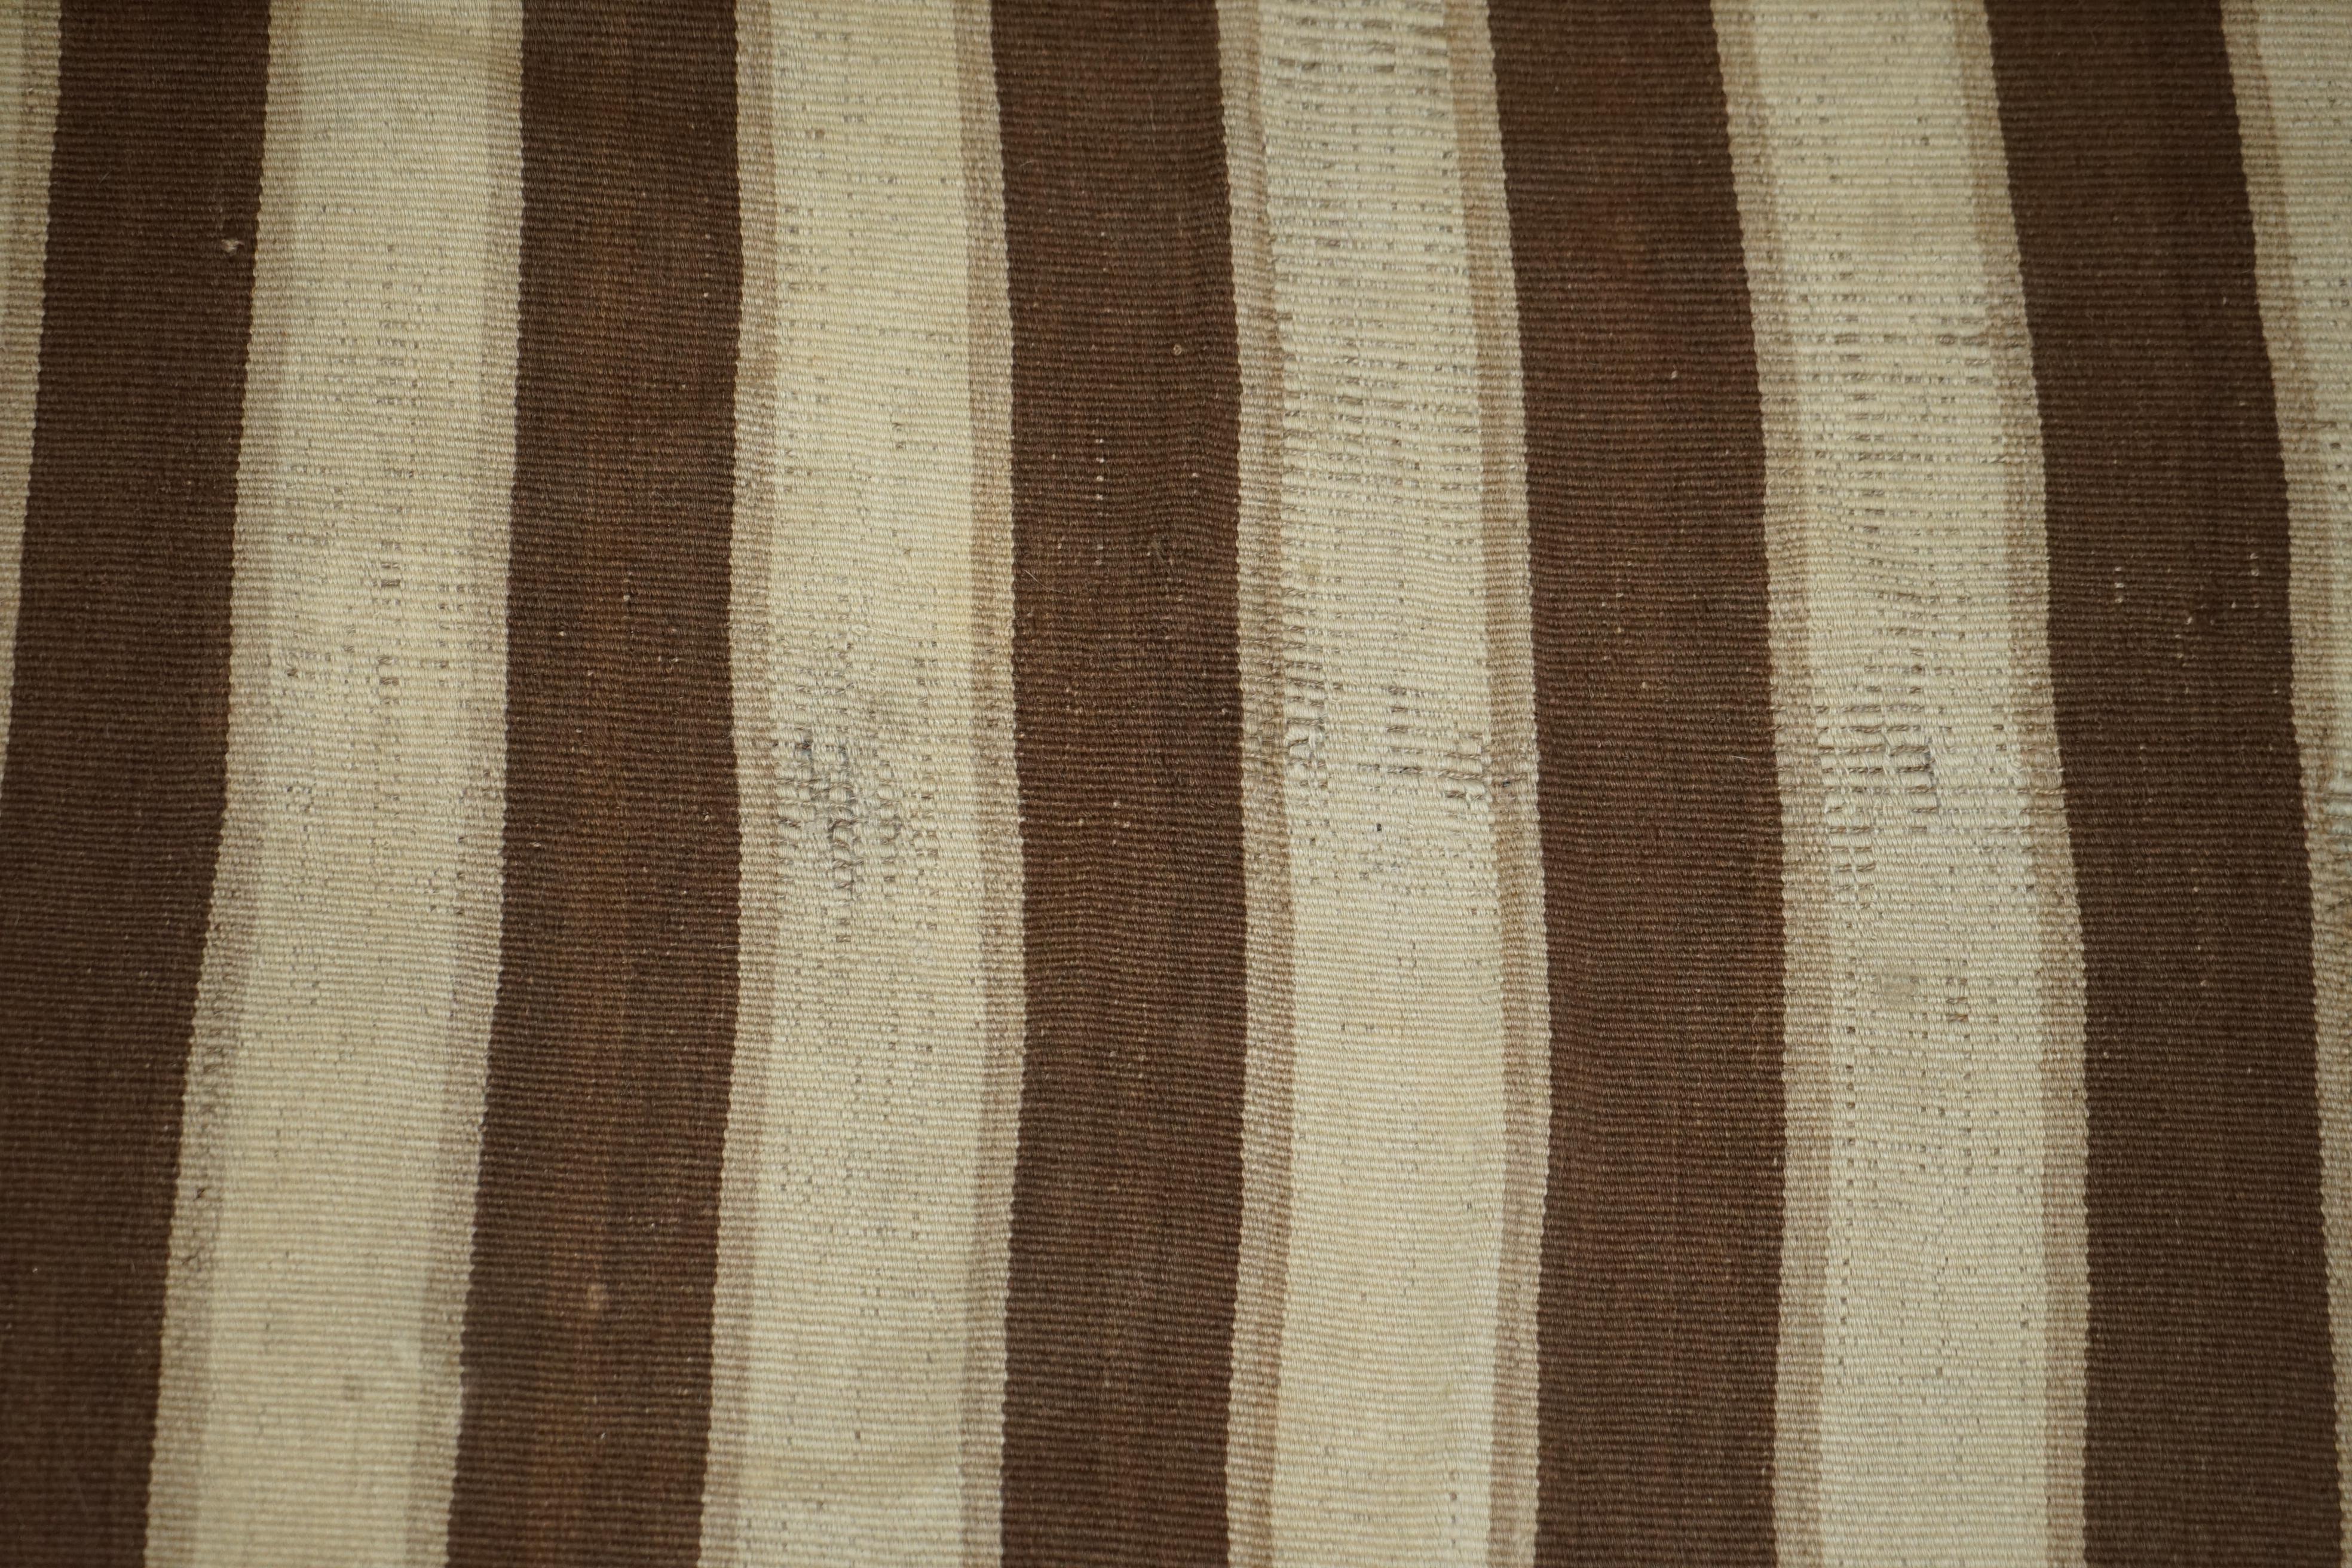 Antique Distressed 1880 Huge Handwoven American Indian Carpet Rug For Sale 4